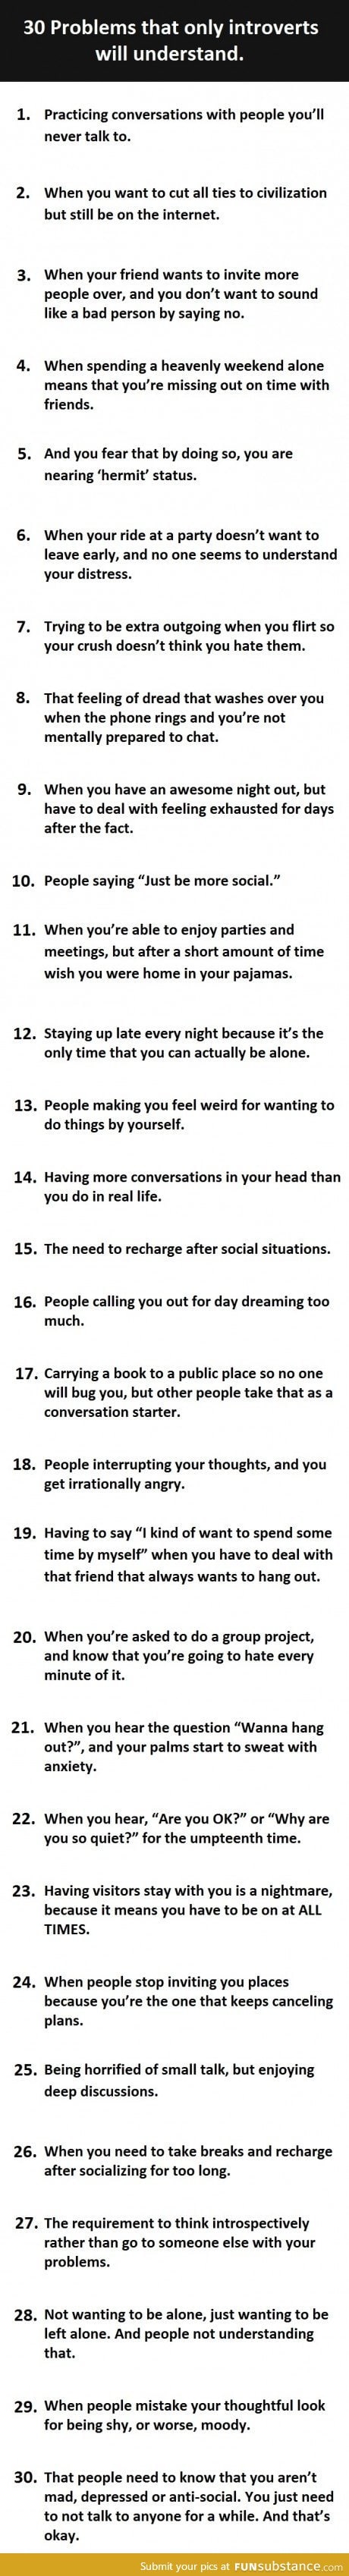 30 introvert problems